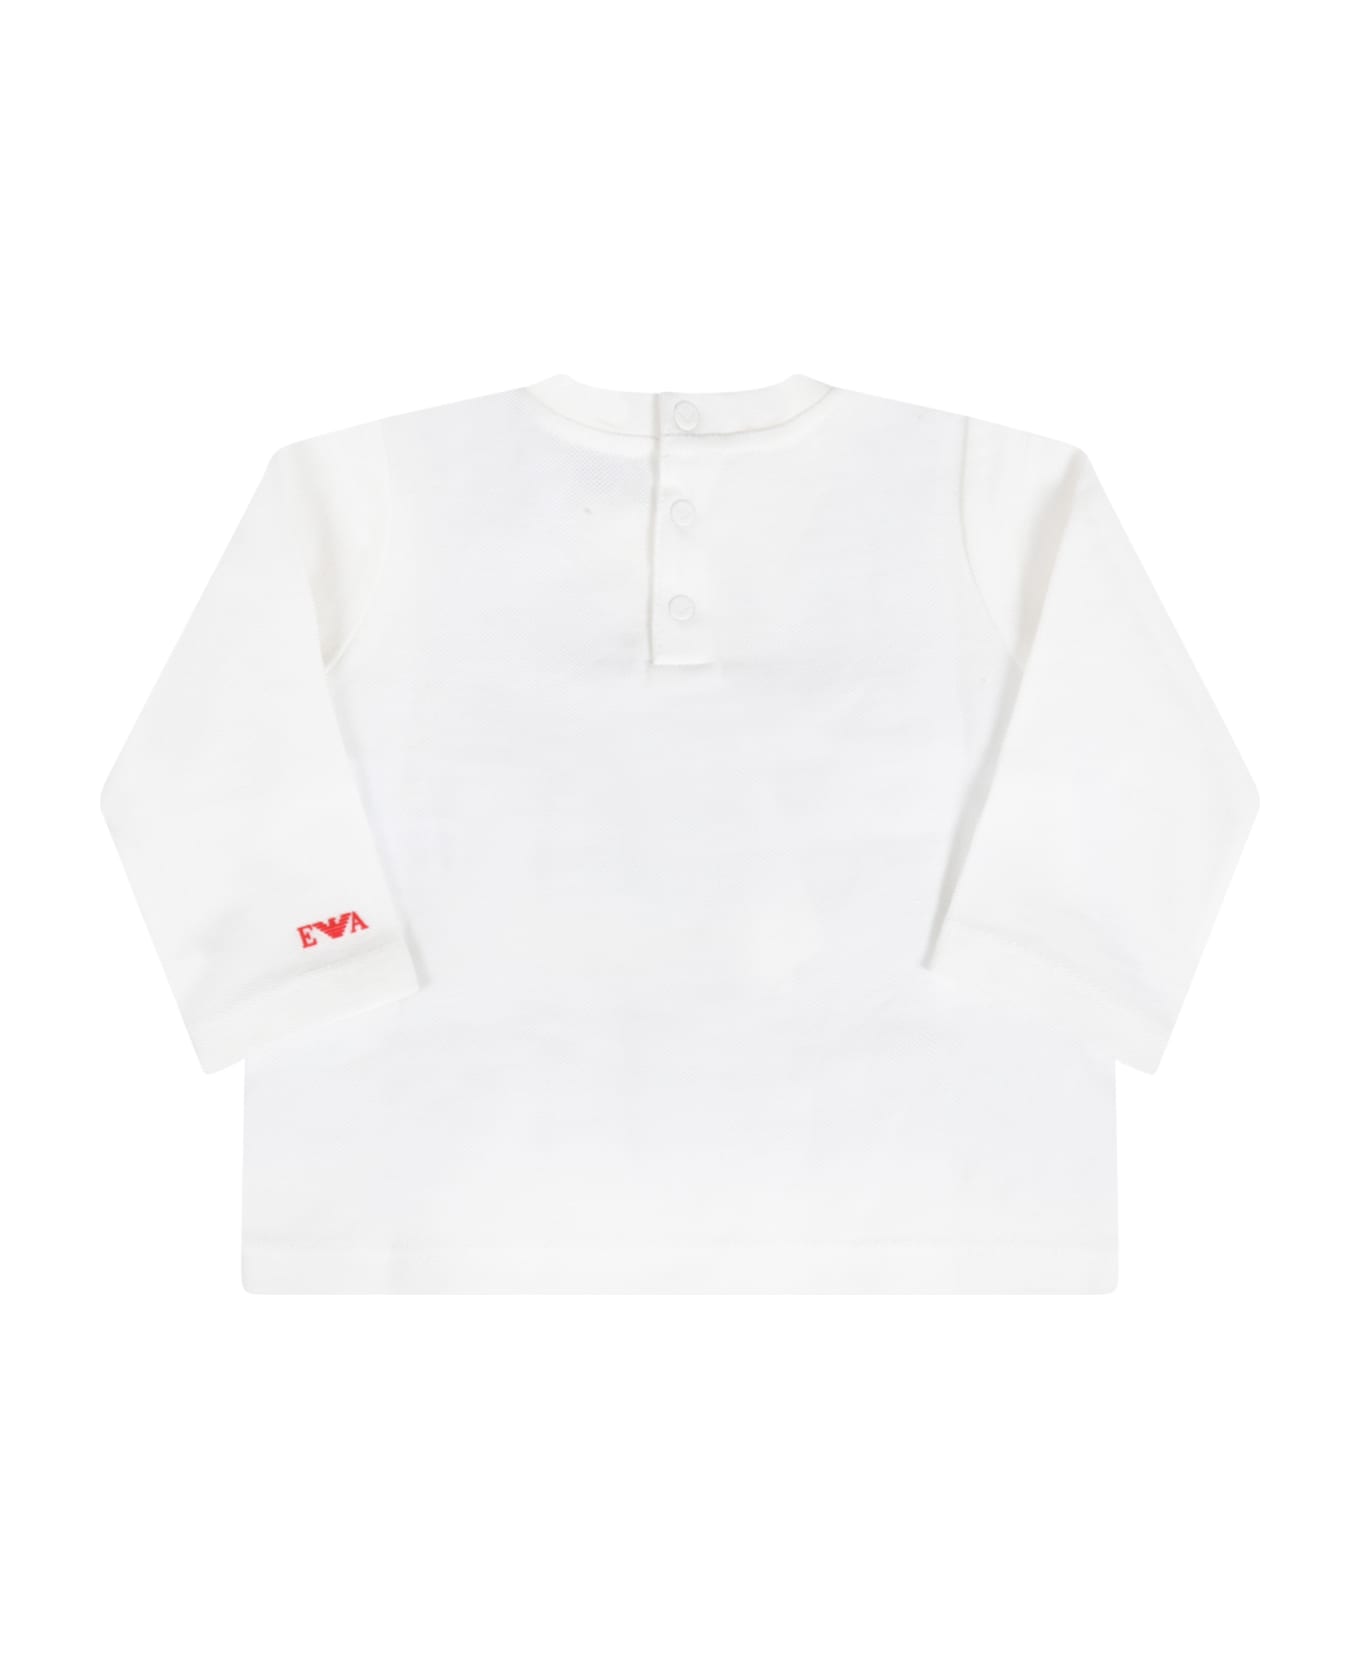 Armani Collezioni White T-shirt For Babyboy - White